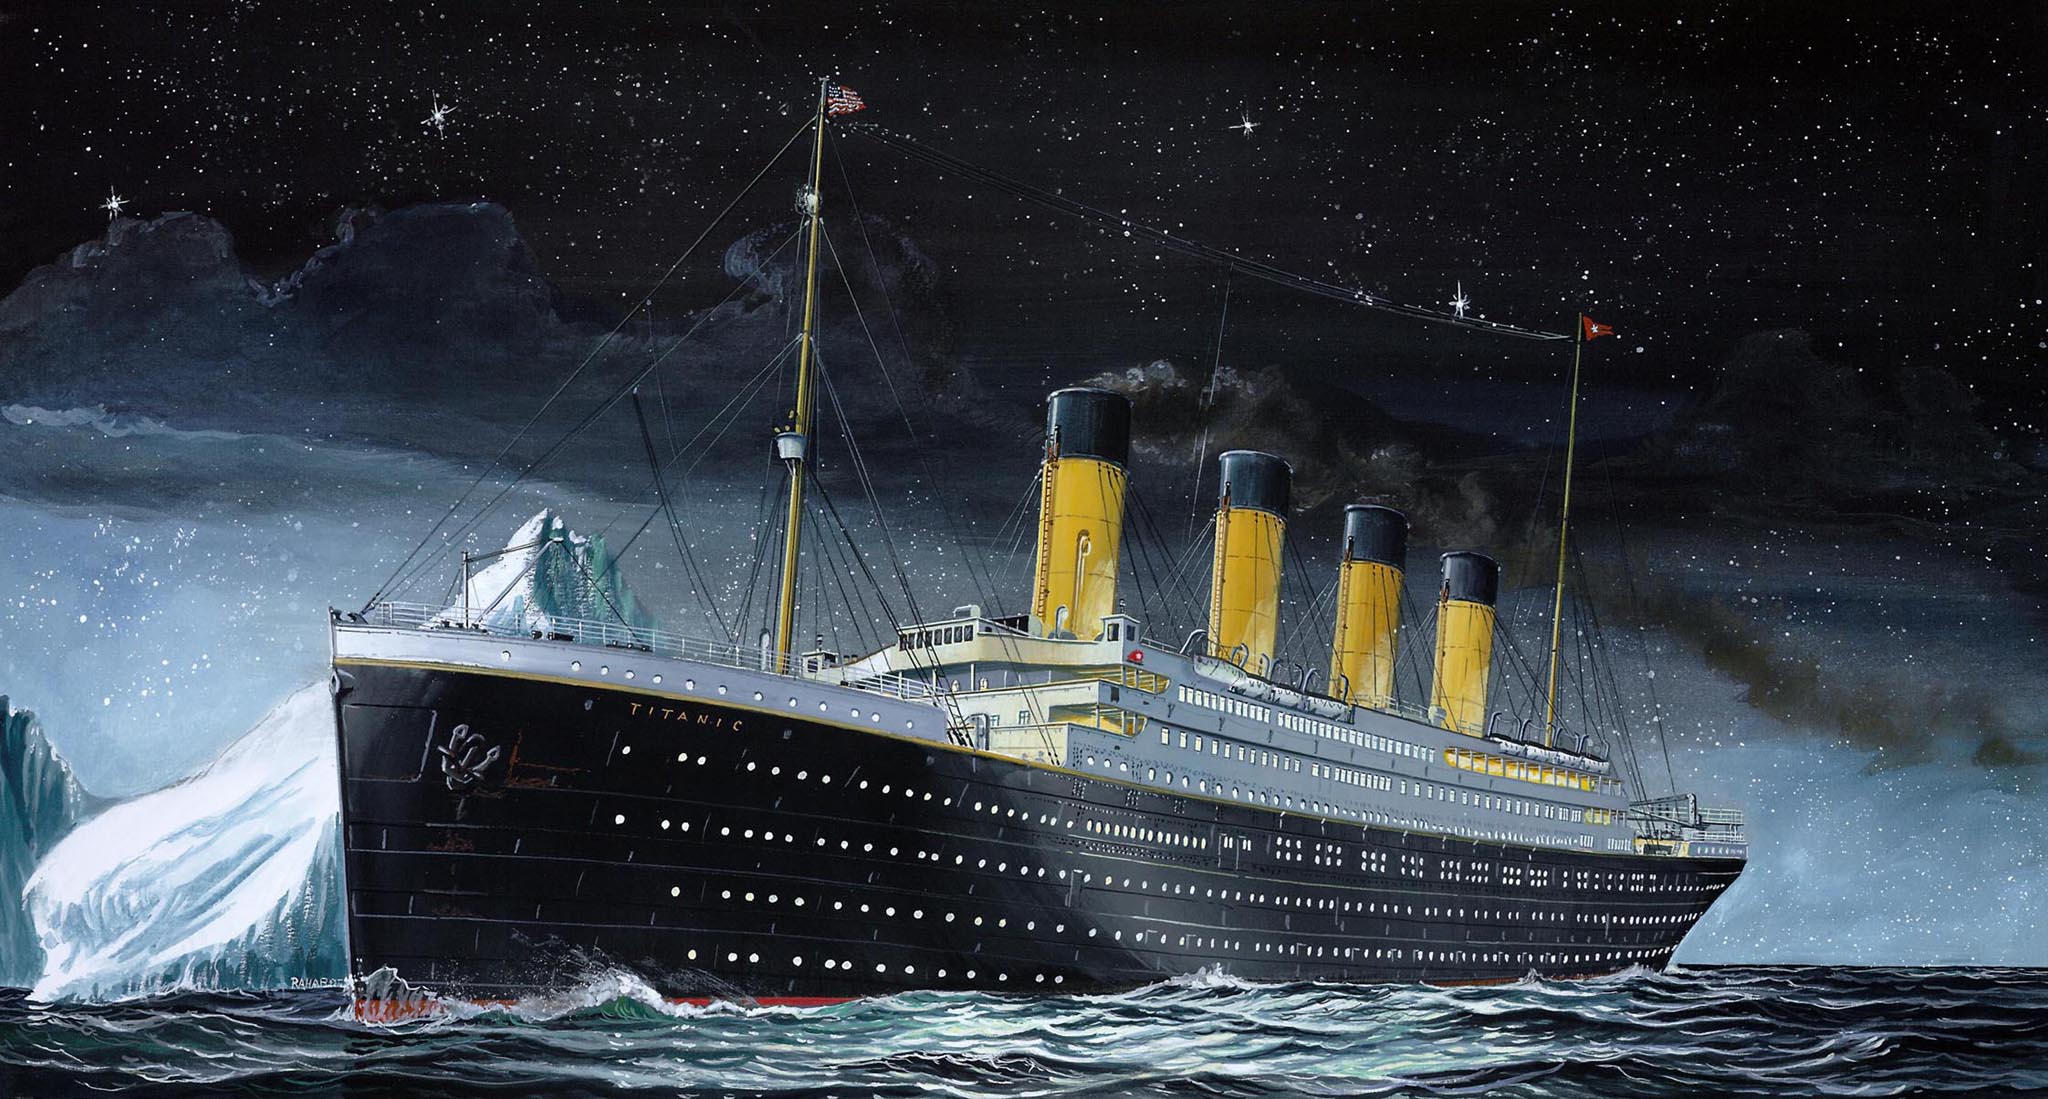 Revell - Model Set, R.M.S. Titanic 65804